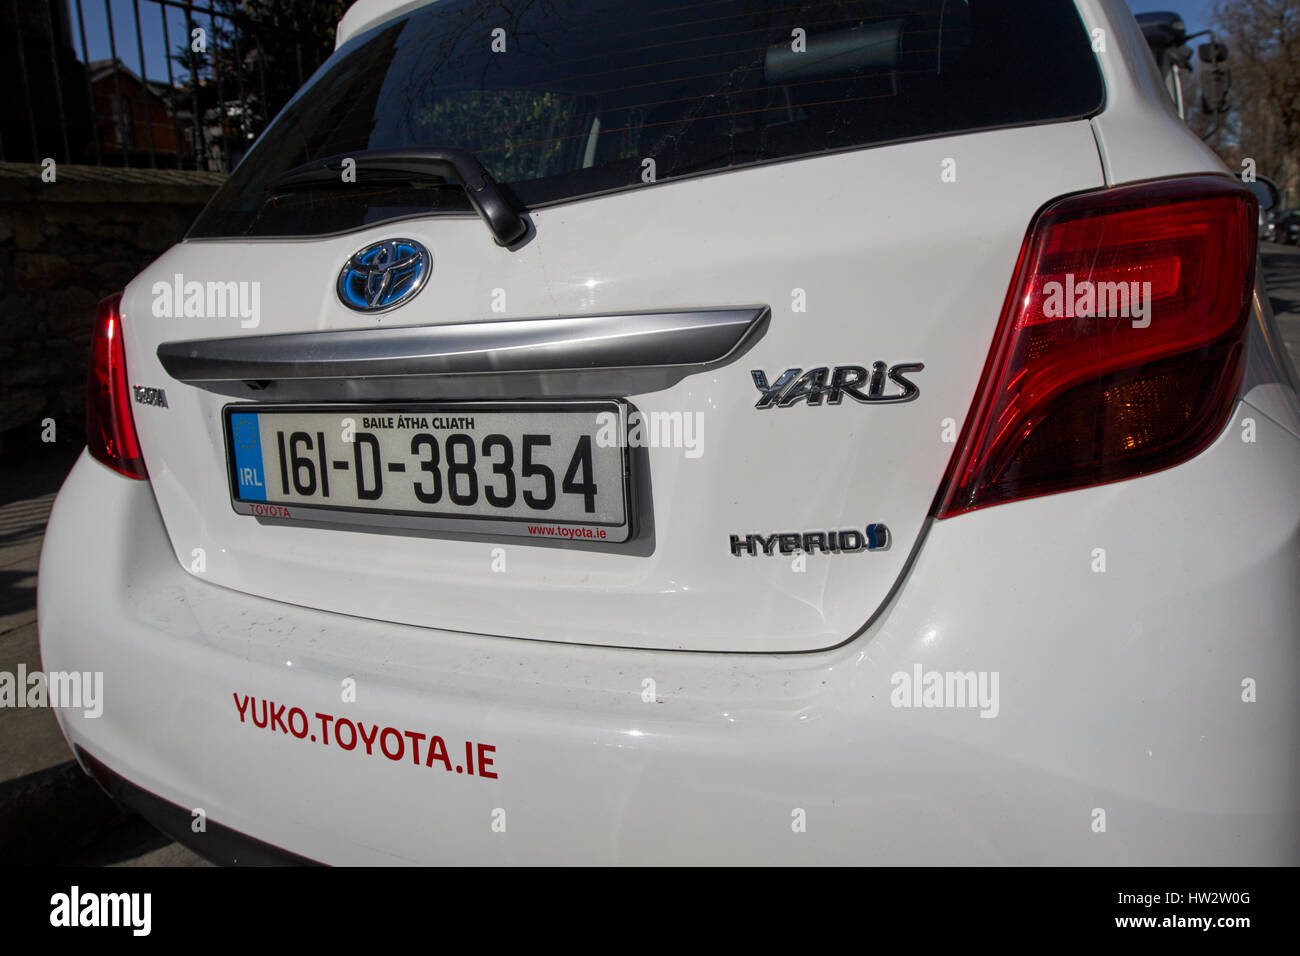 Toyota Yaris hybrid city car yuko compartir coche club vehículo de alquiler por hora de Dublin City Centre República de Irlanda Foto de stock